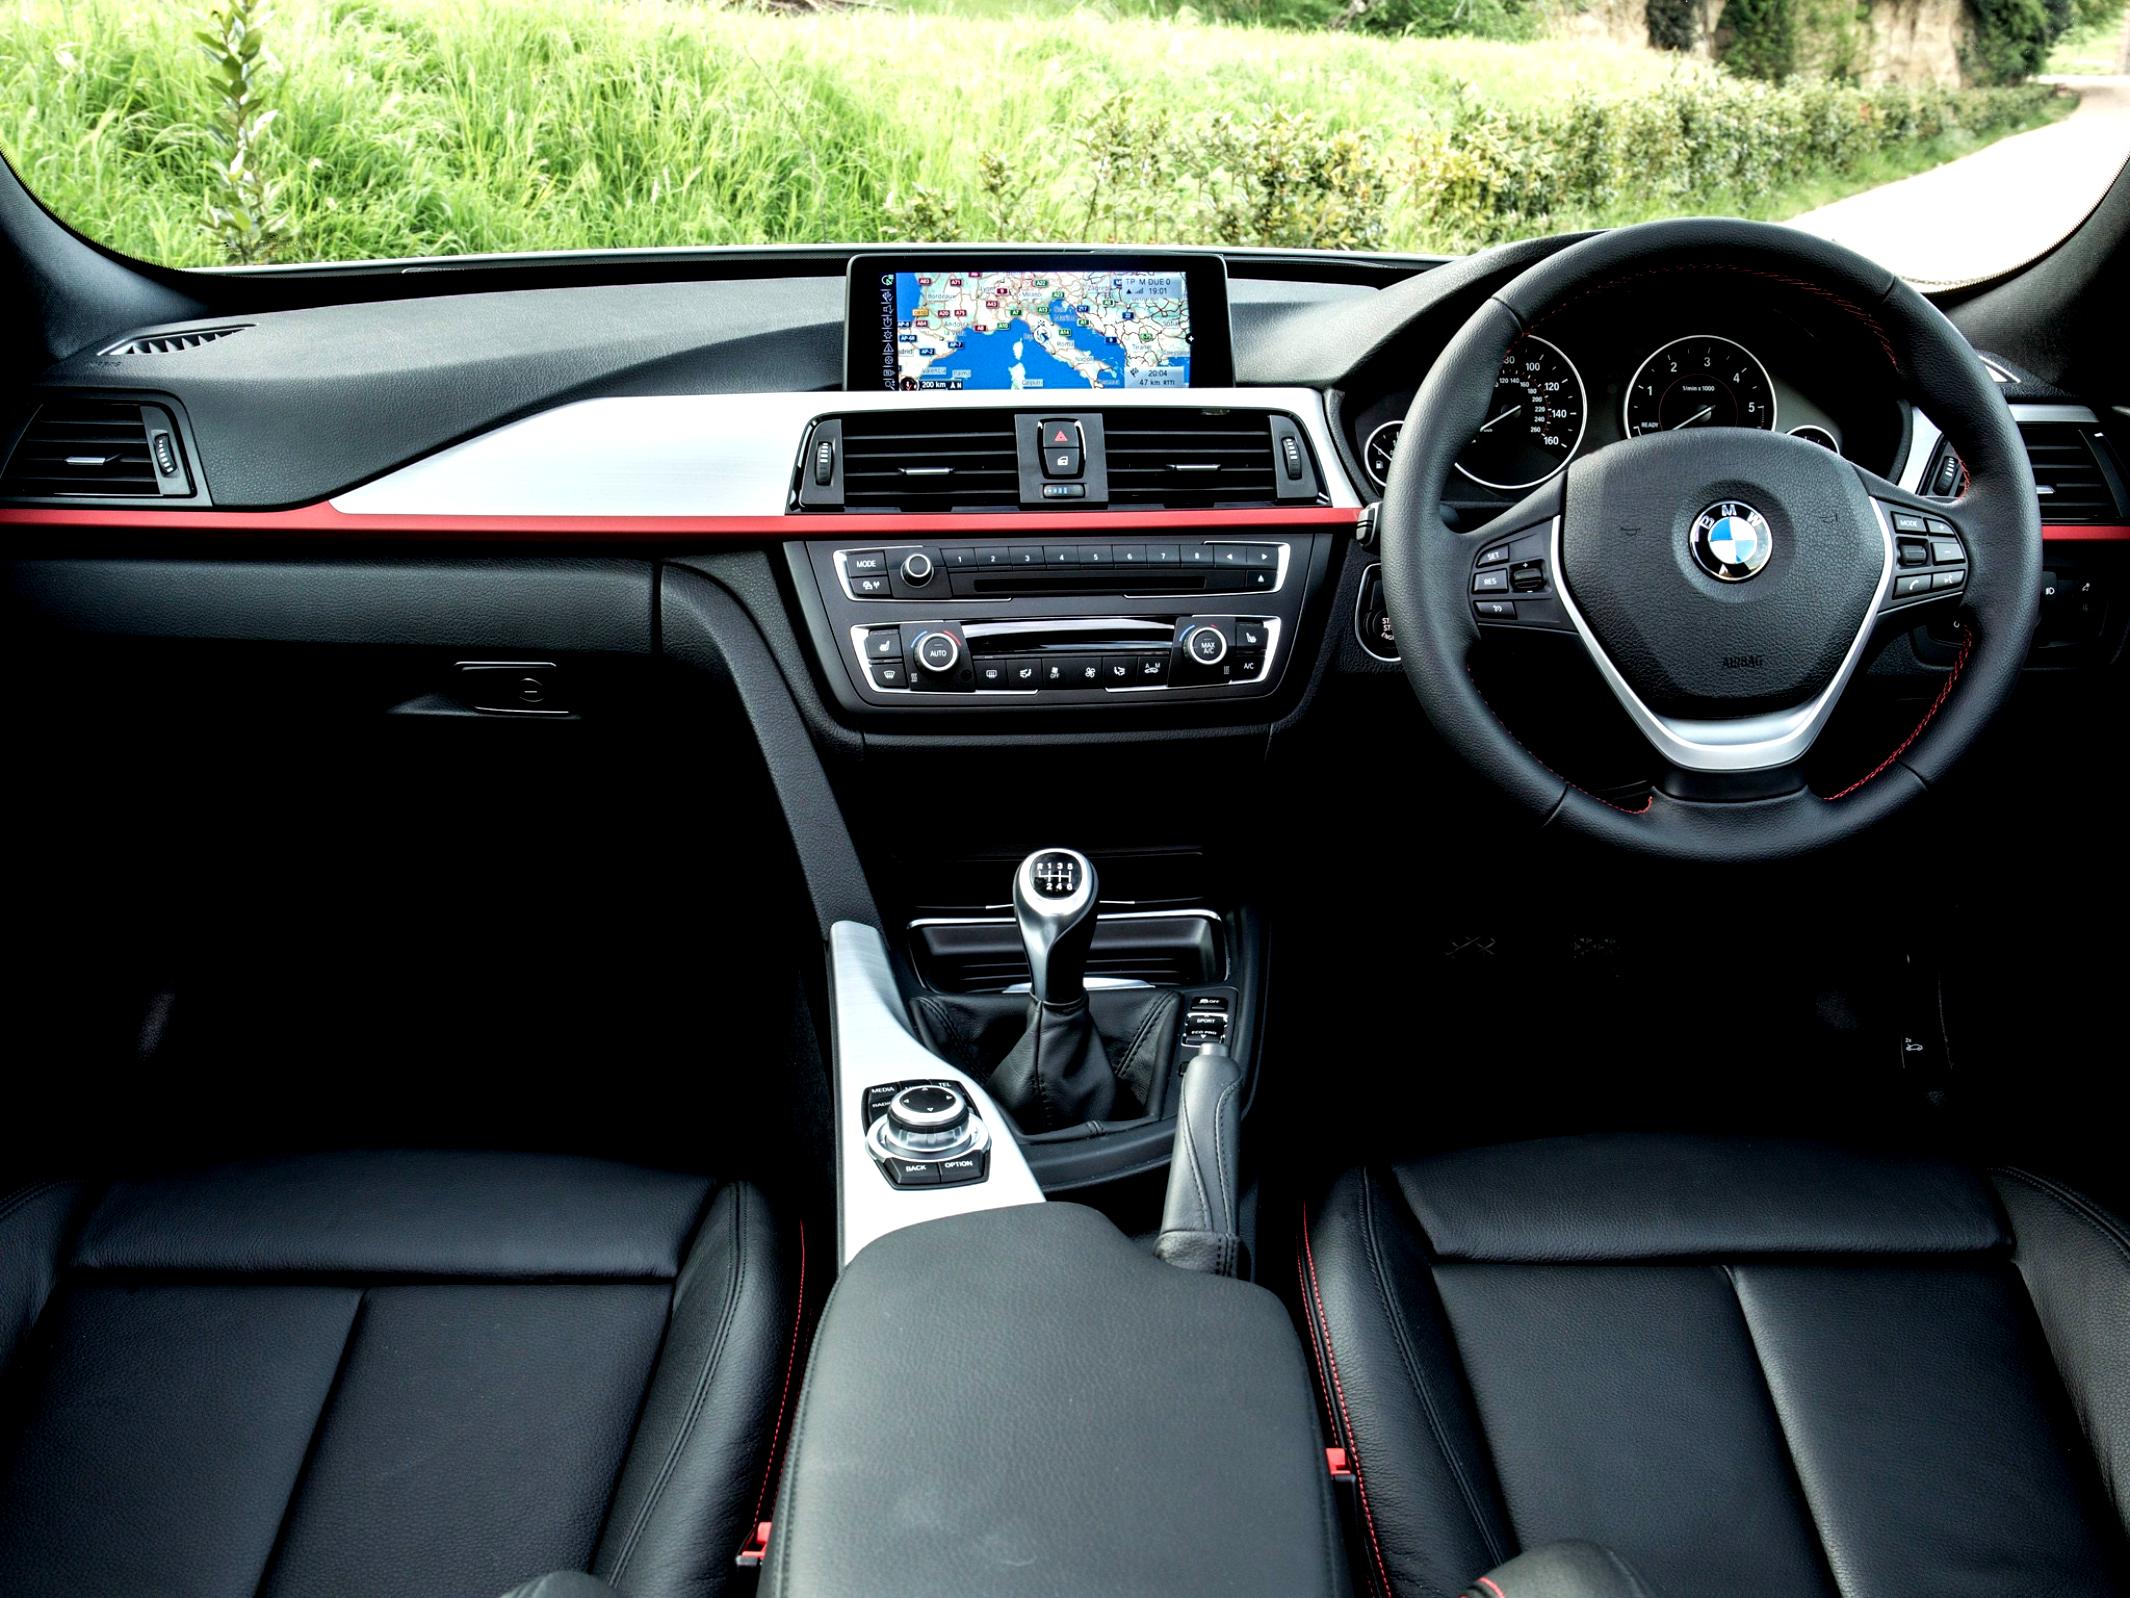 BMW 3 Series Gran Turismo 2013 #156